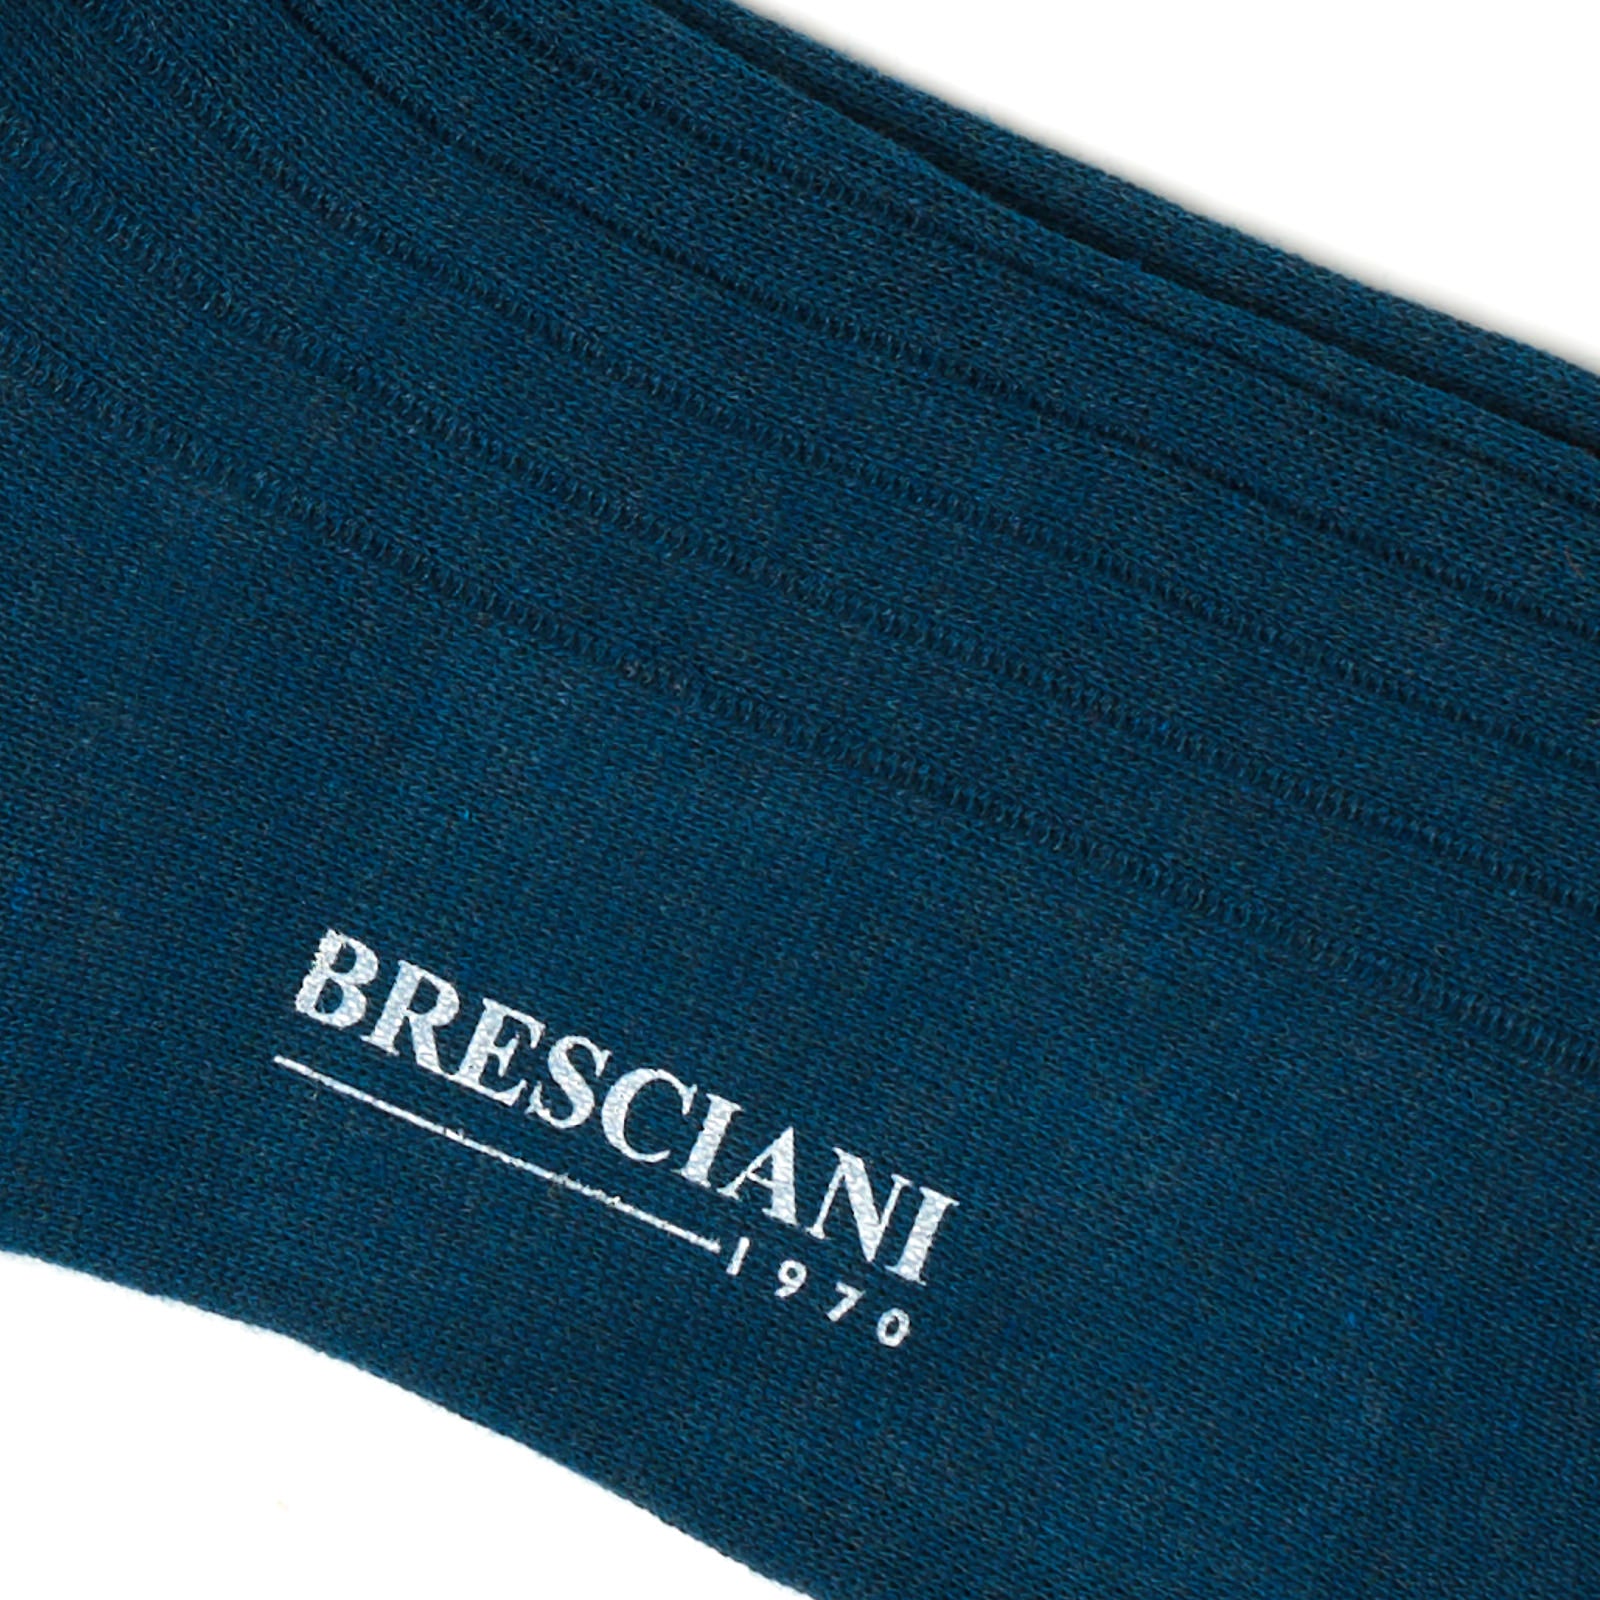 BRESCIANI Recycled Cotton Blend Mid Calf Length Socks M-L BRESCIANI